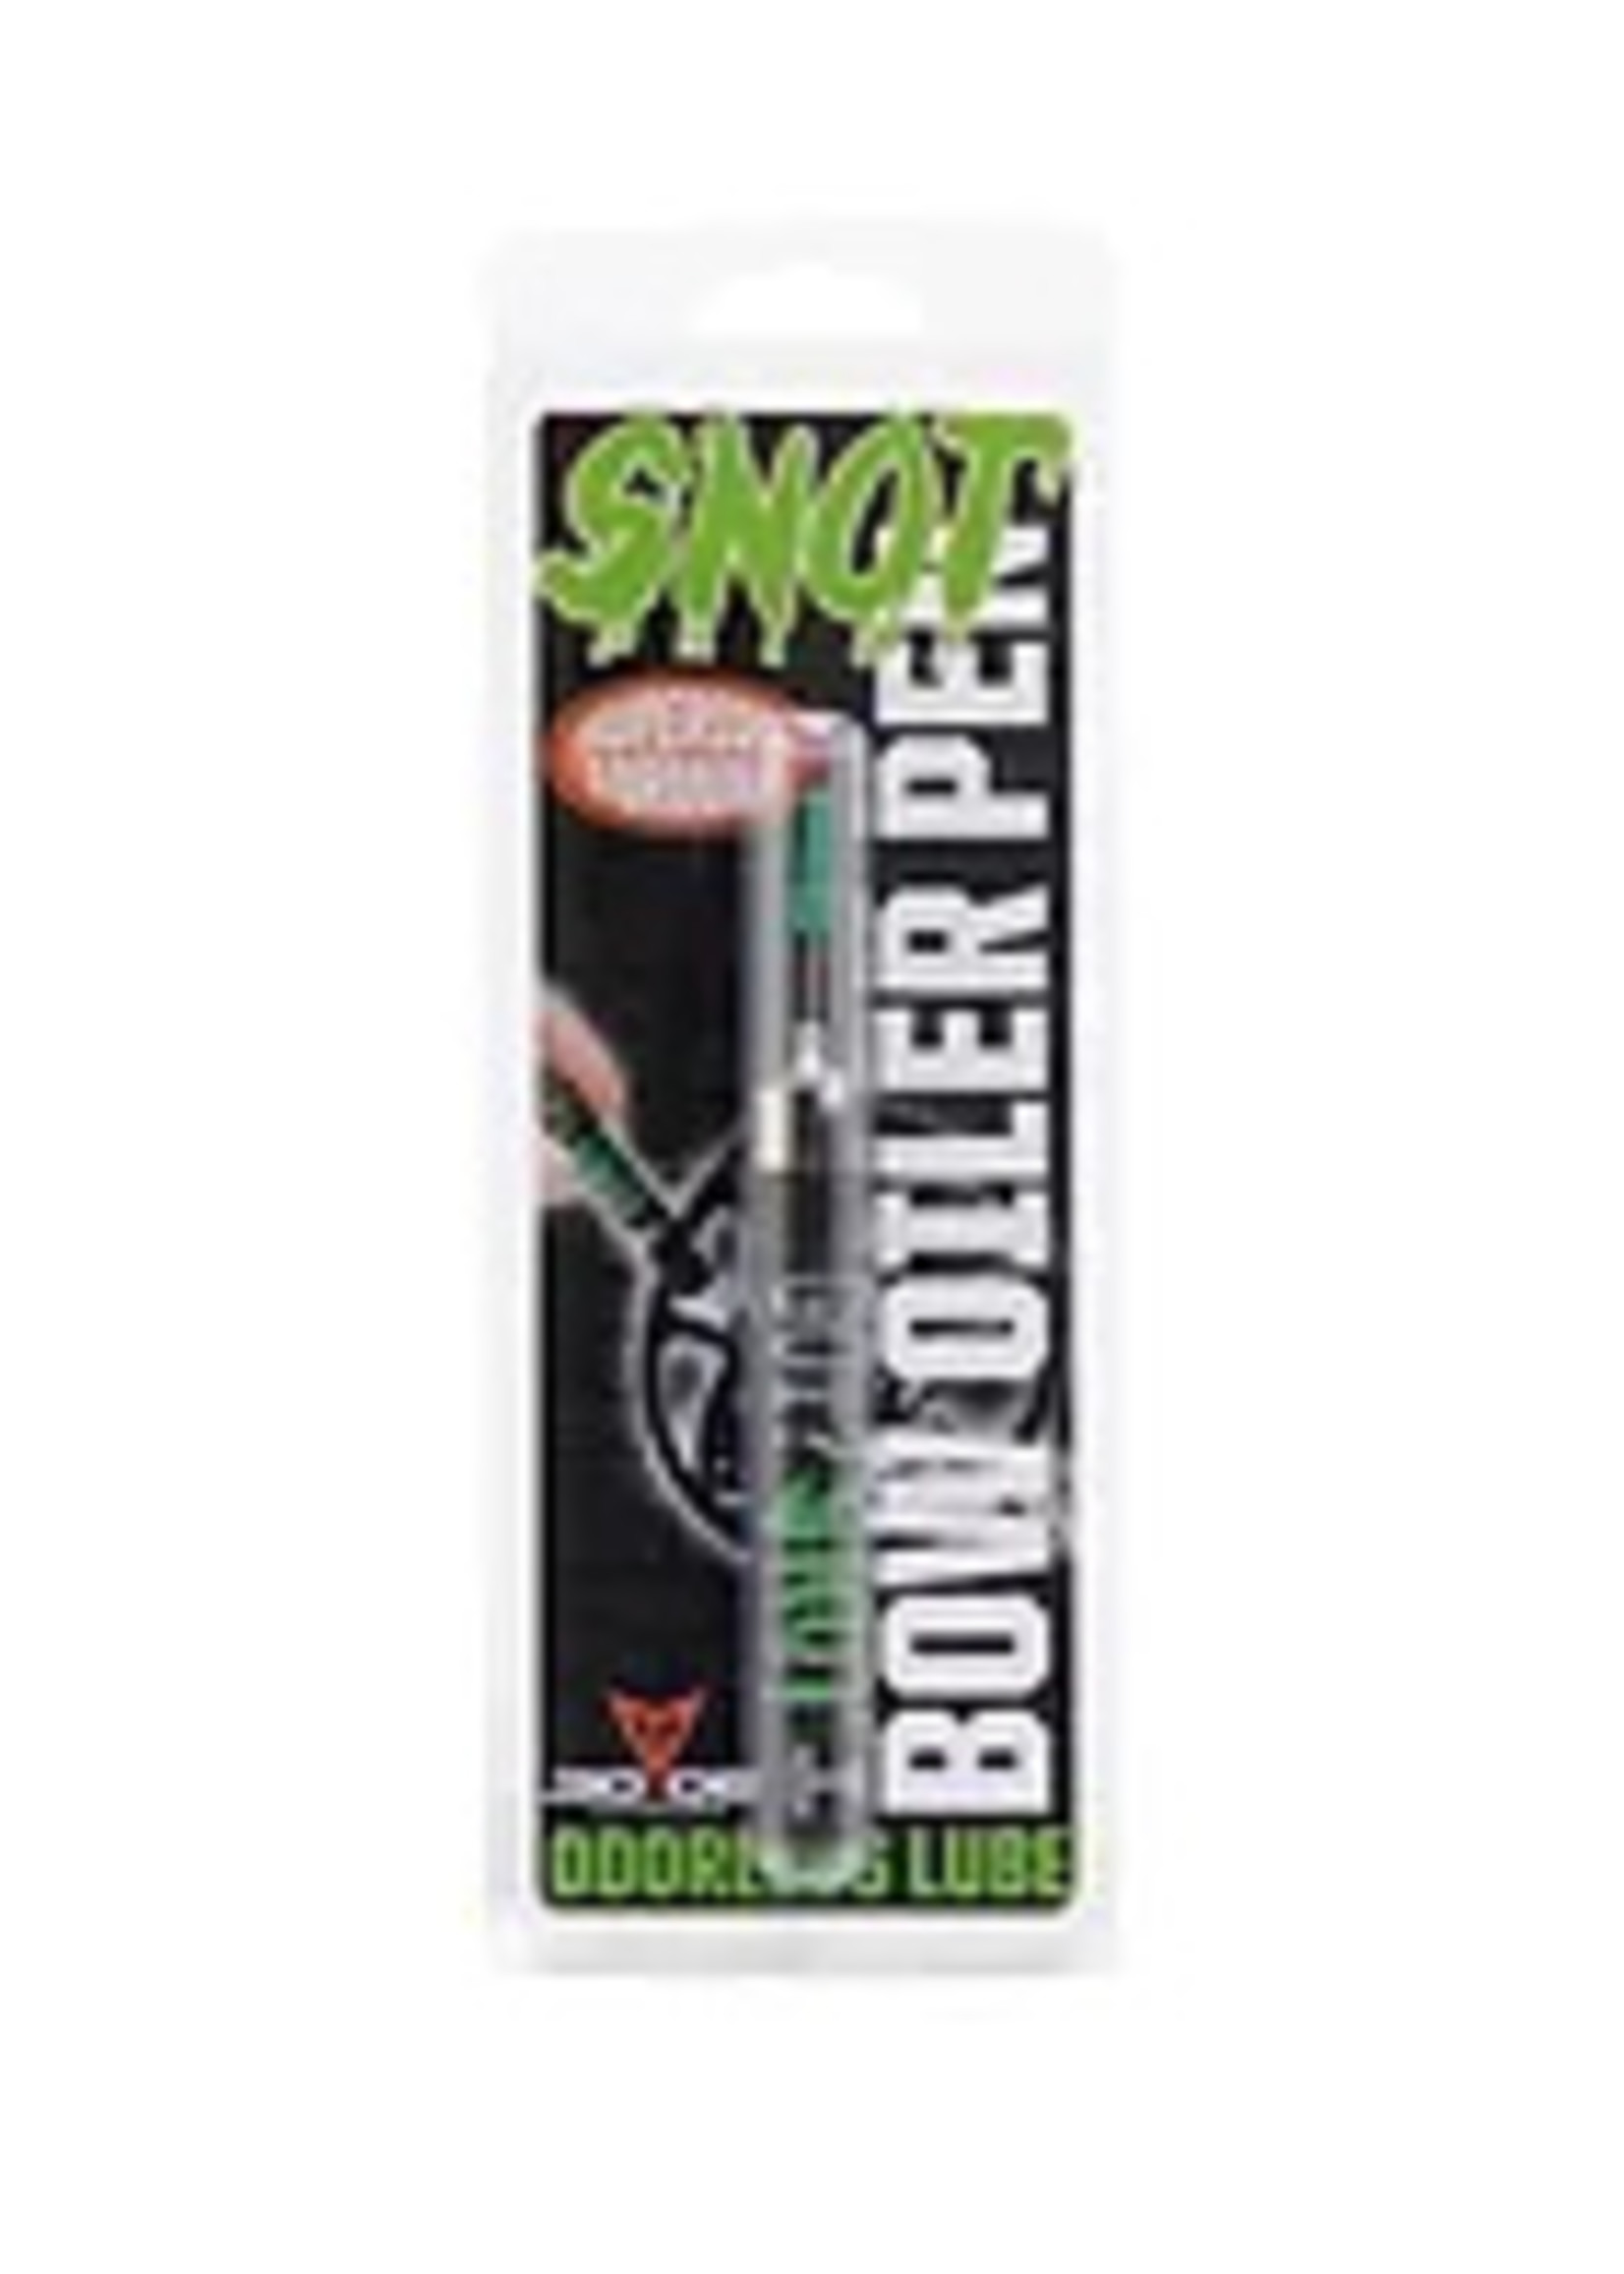 3006 Outdoors bow snot odorless bow oiler pen